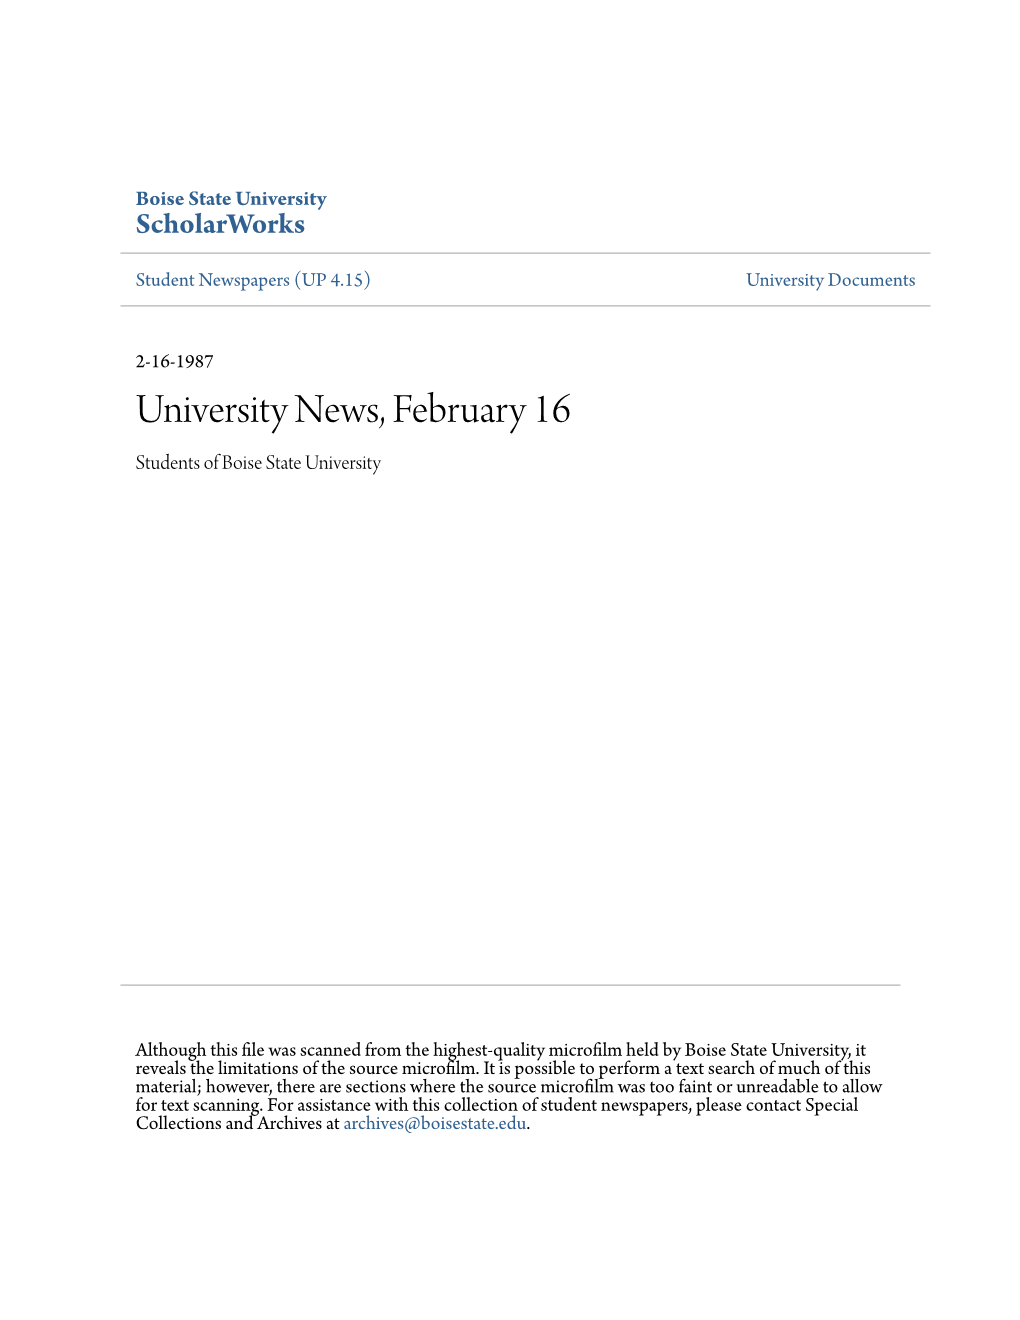 University News, February 16 Students of Boise State University